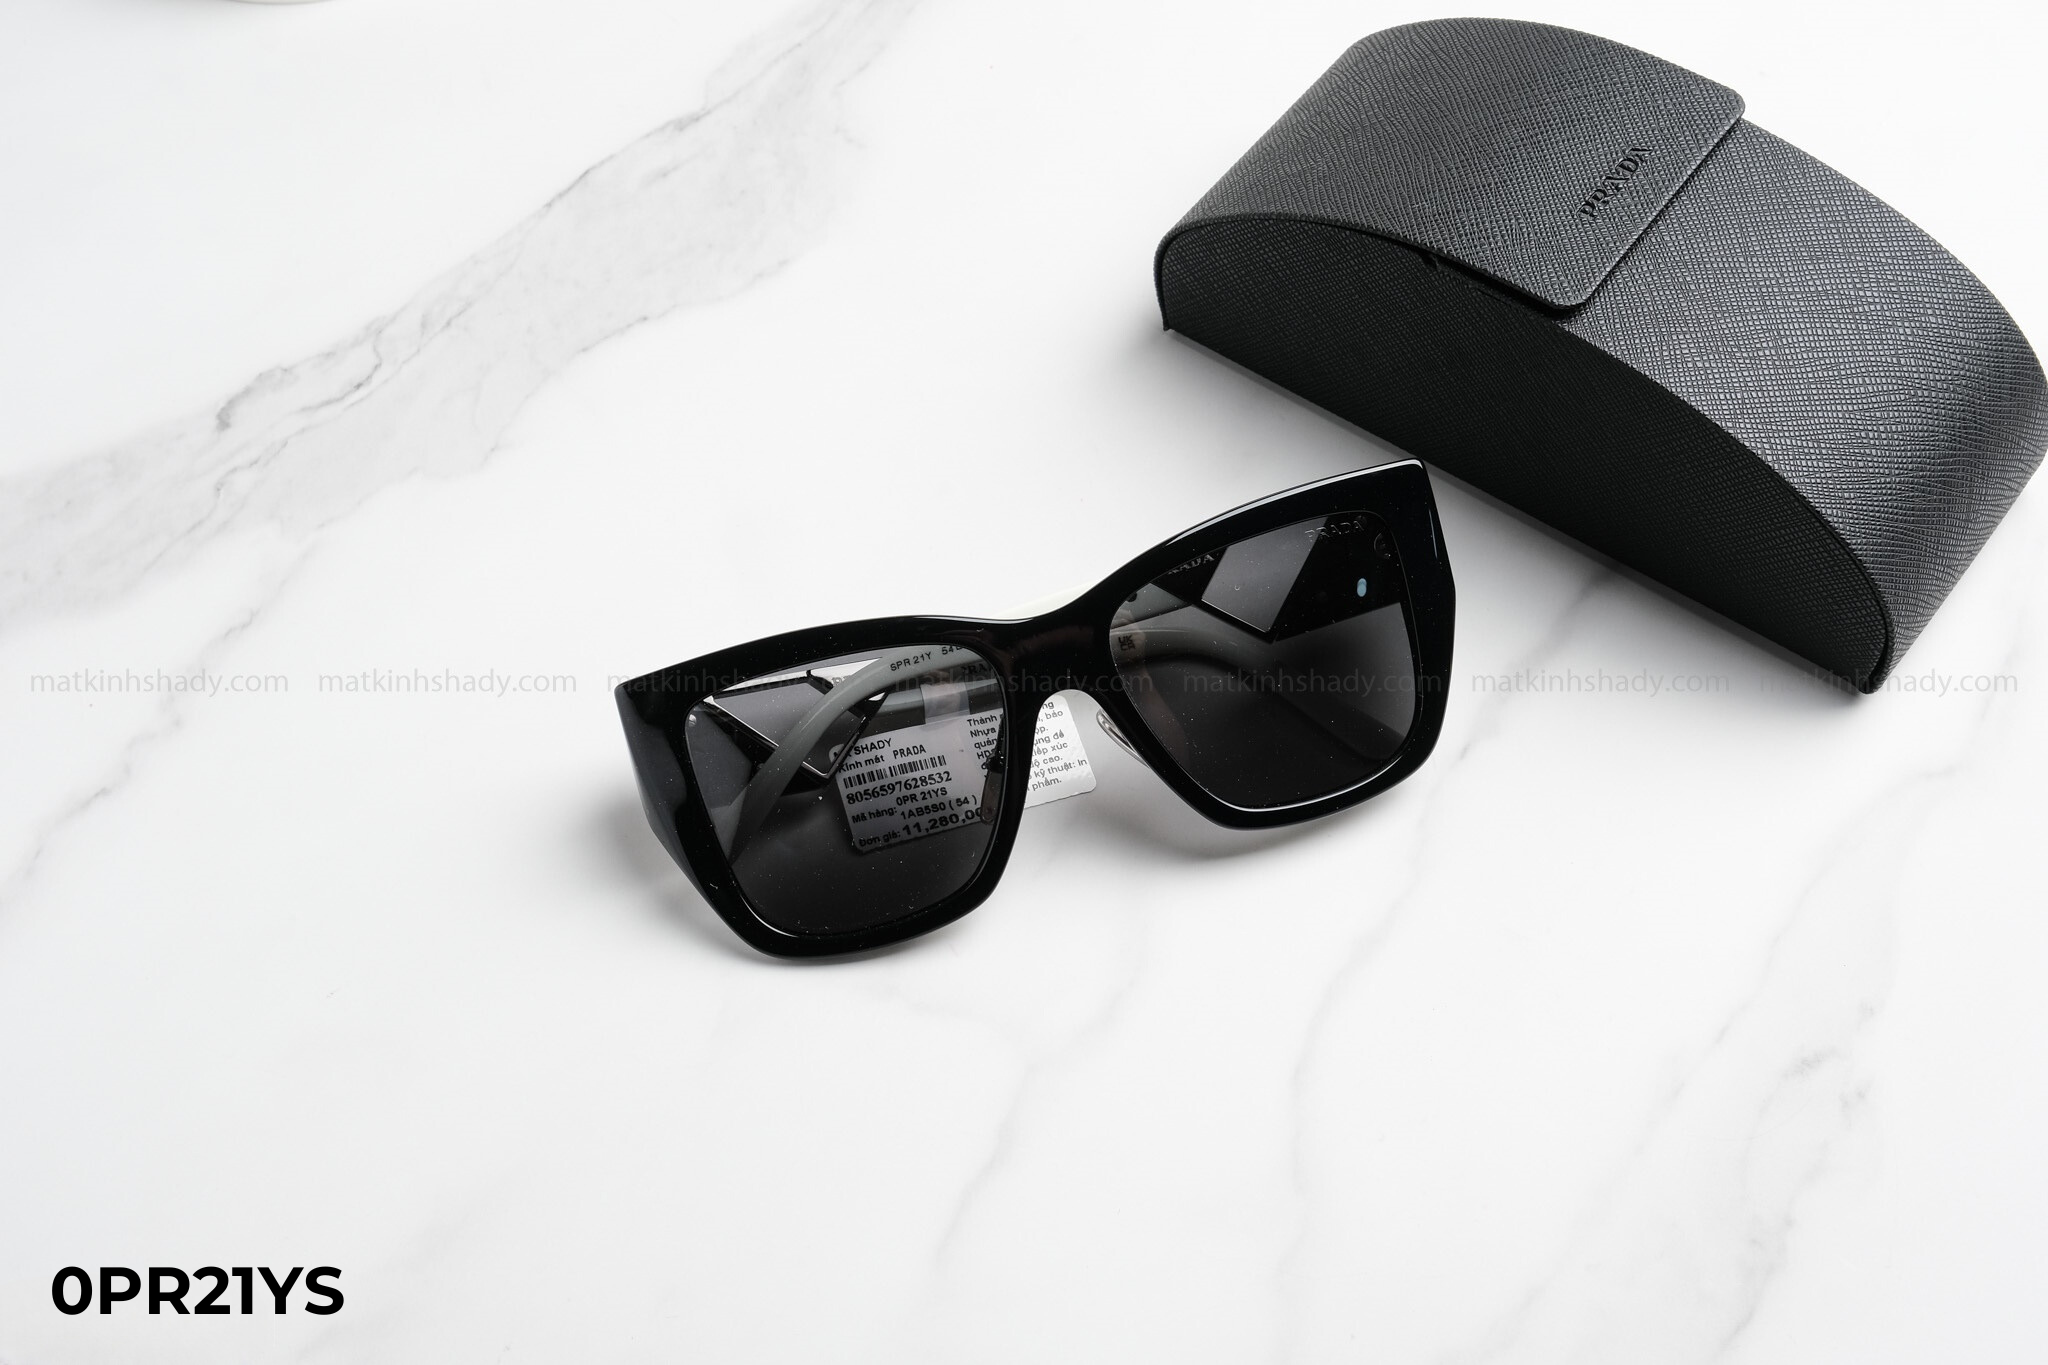  Prada - Eyewear - Sunglasses - 0PR21YS 